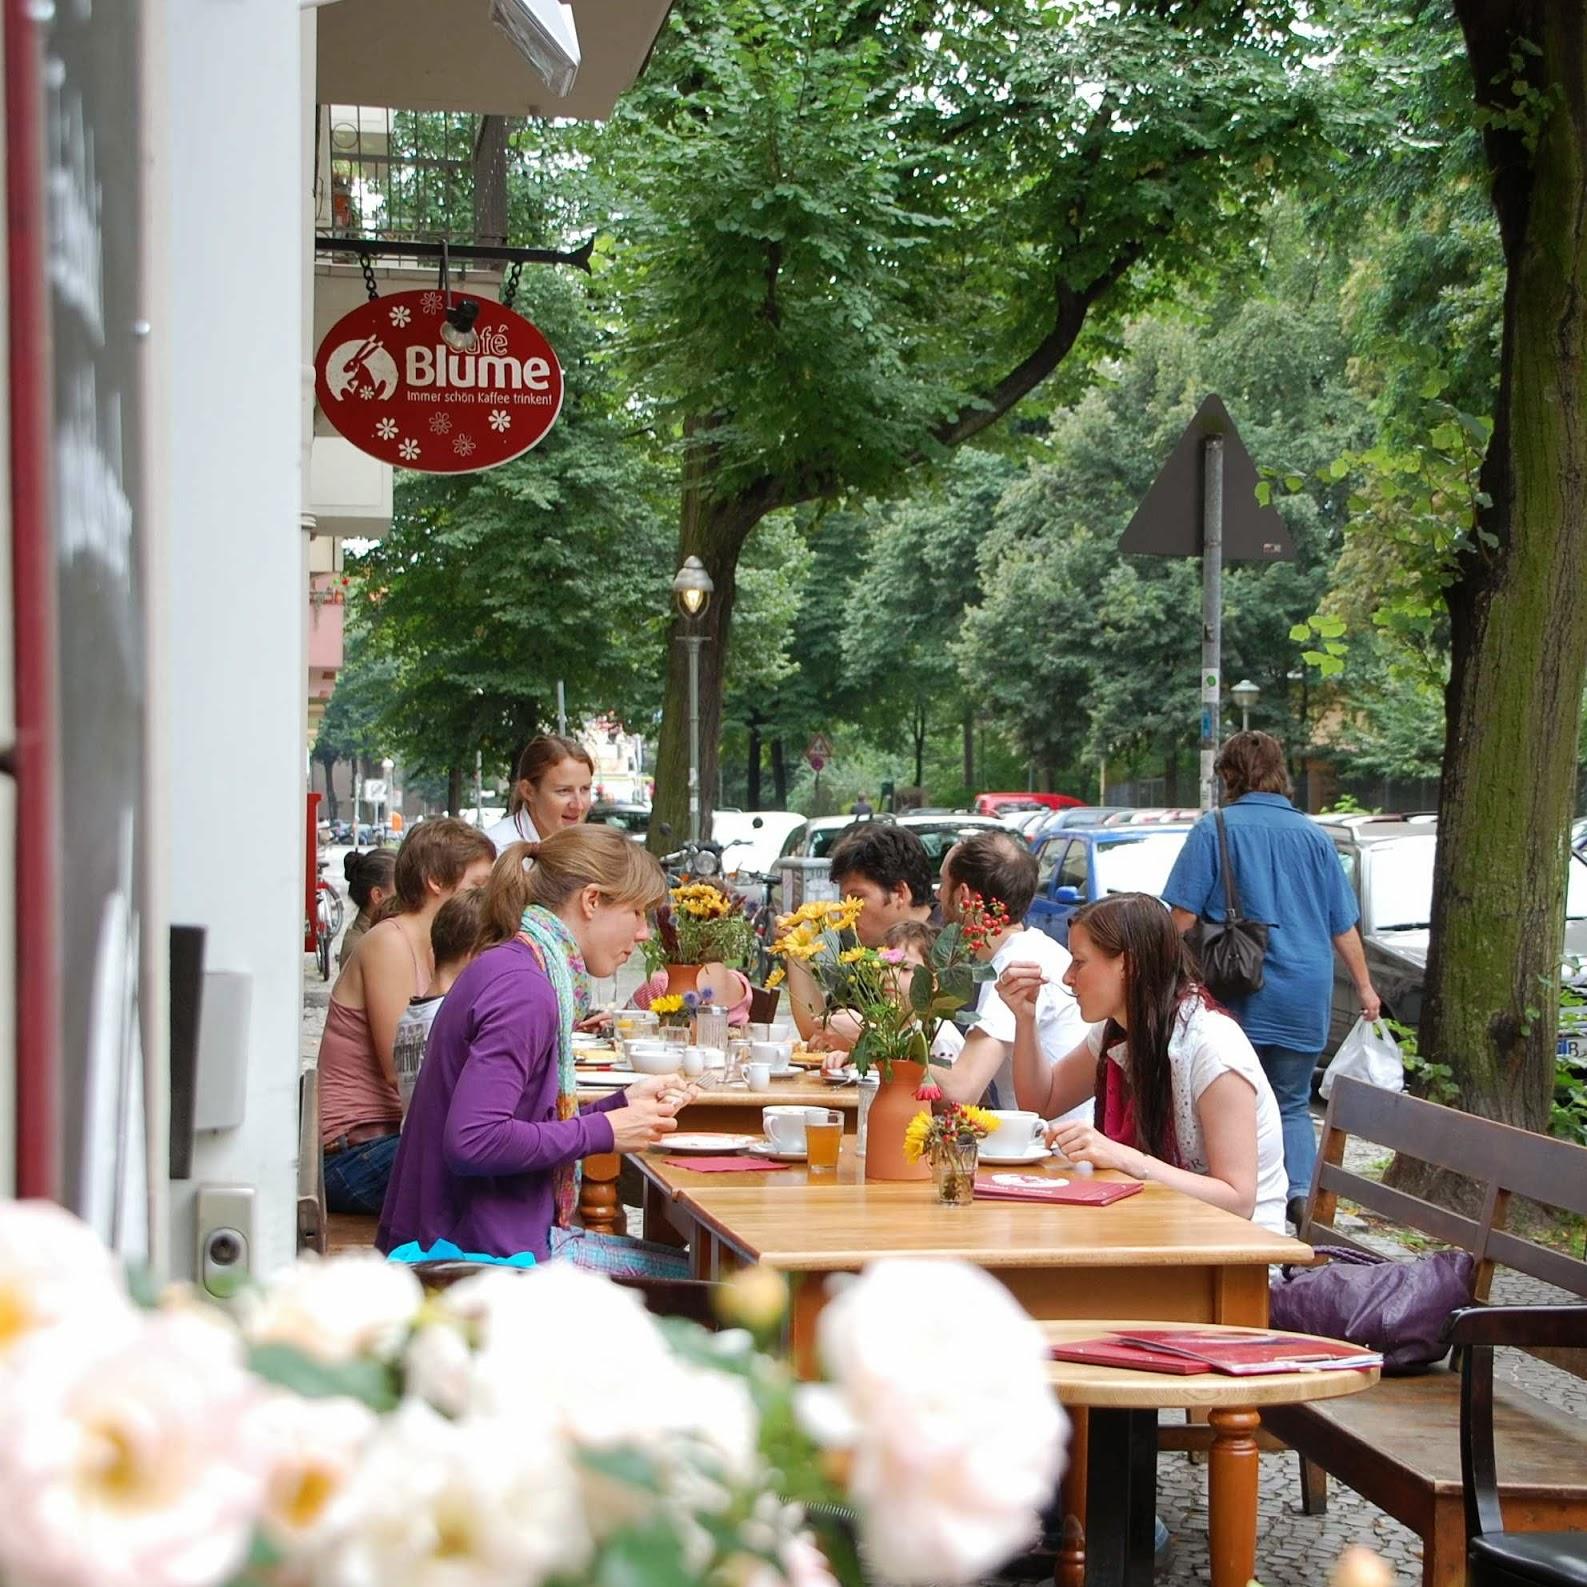 Restaurant "Blume an der Hasenheide" in Berlin